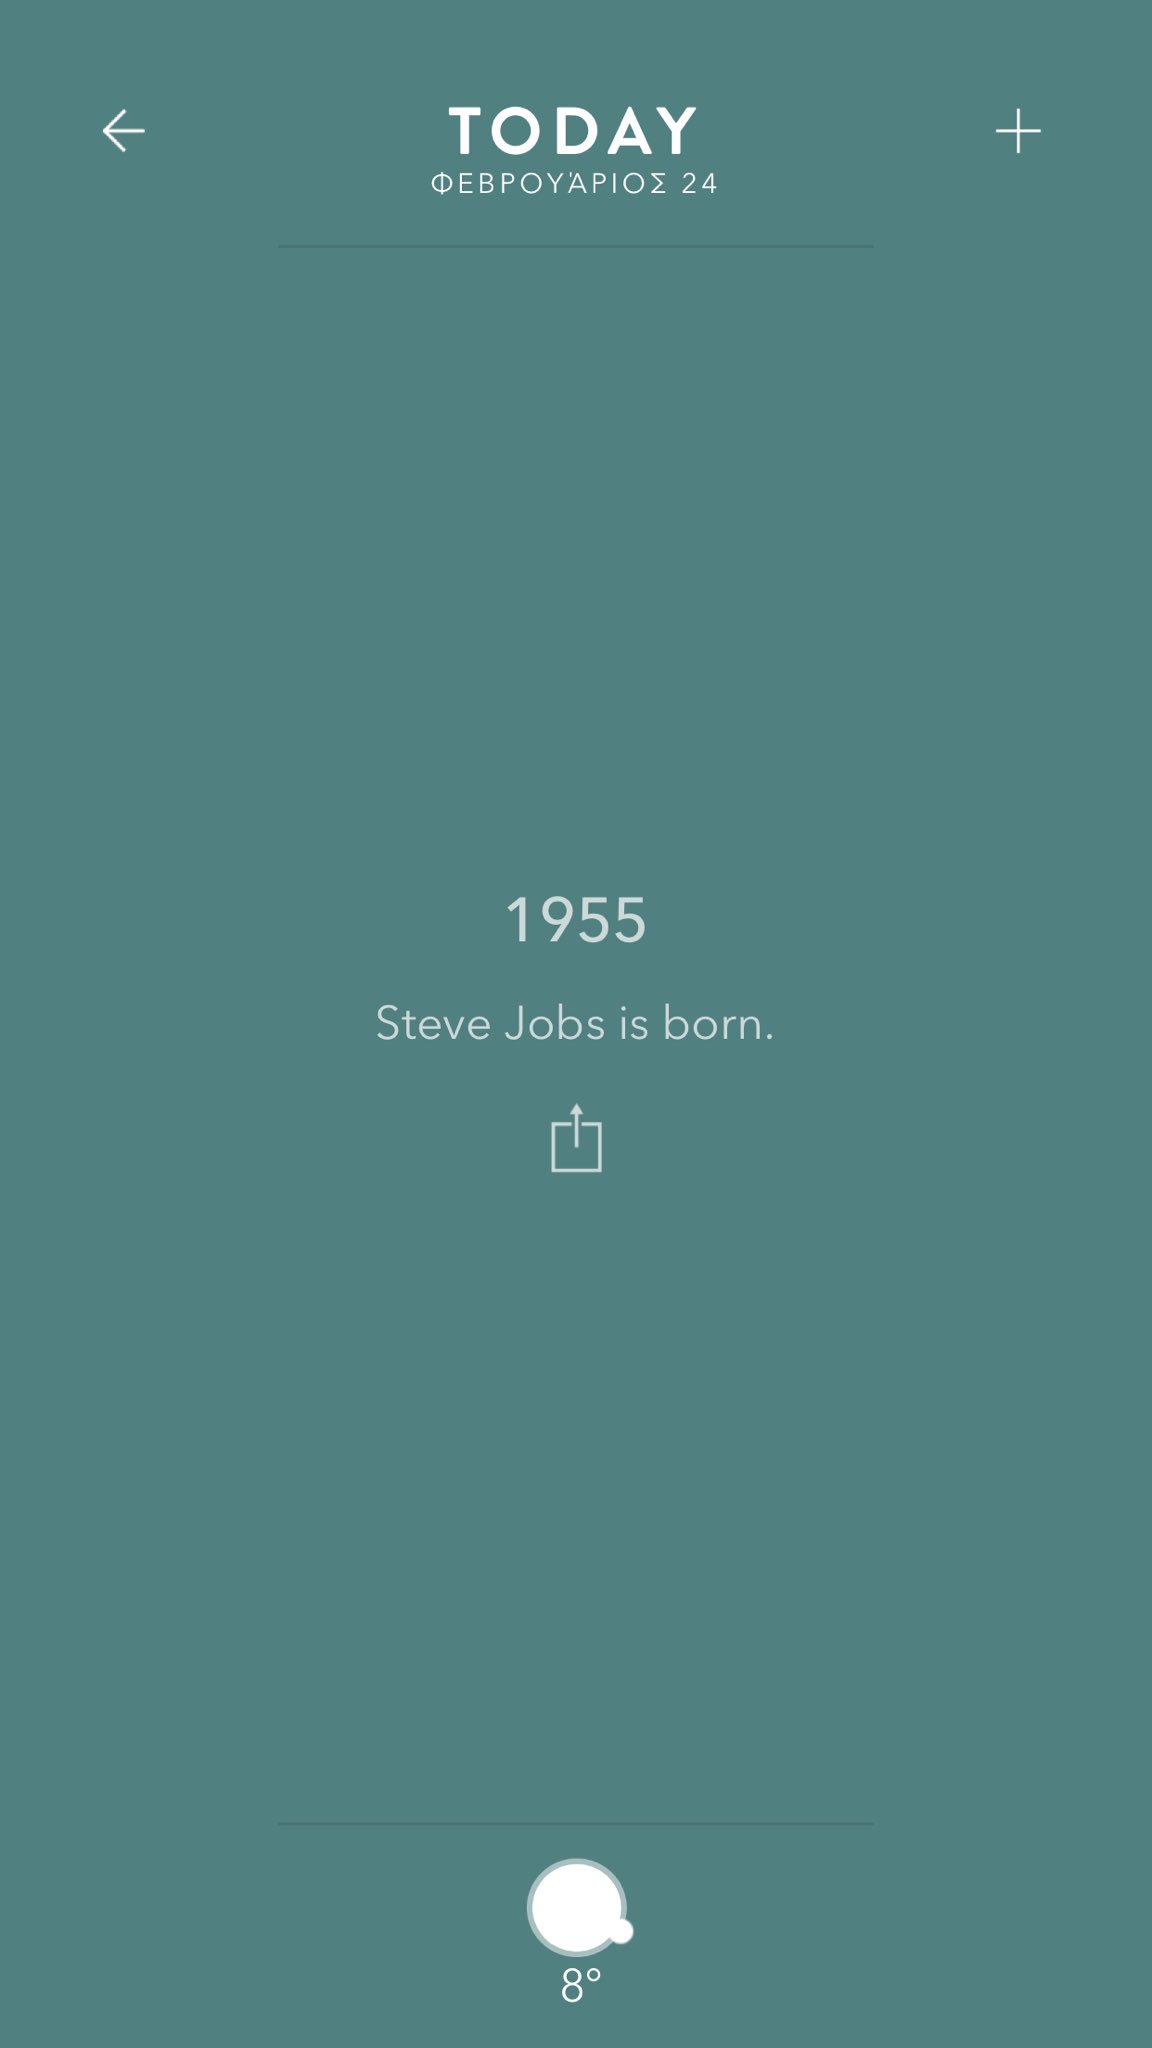 THENERDGR: Happy birthday Steve Jobs 